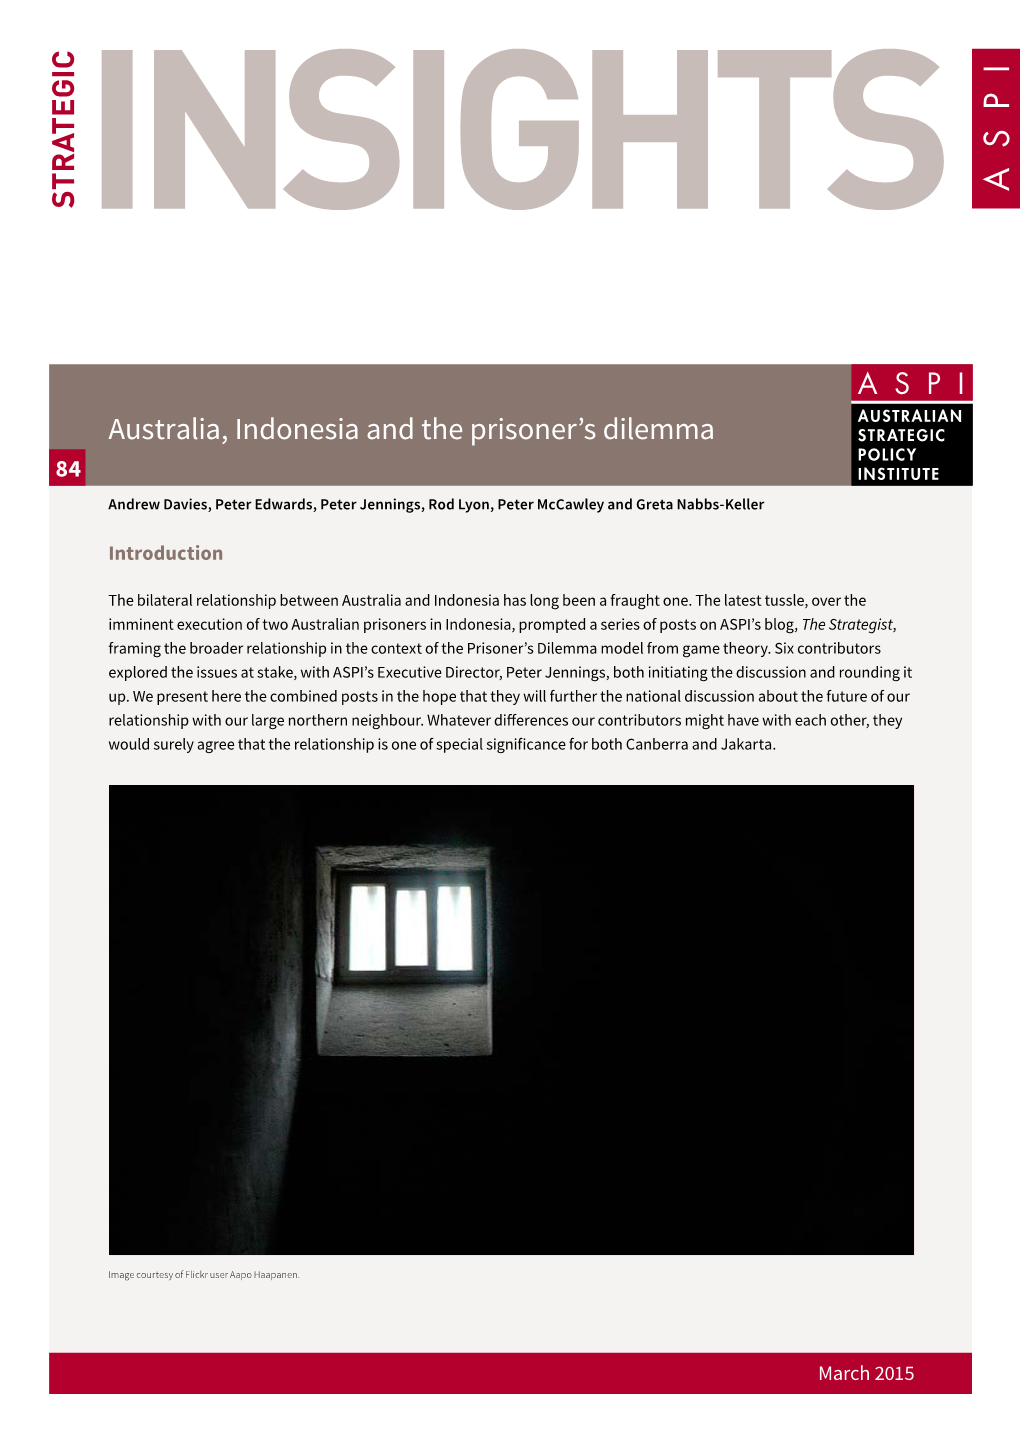 Australia, Indonesia and the Prisoner's Dilemma